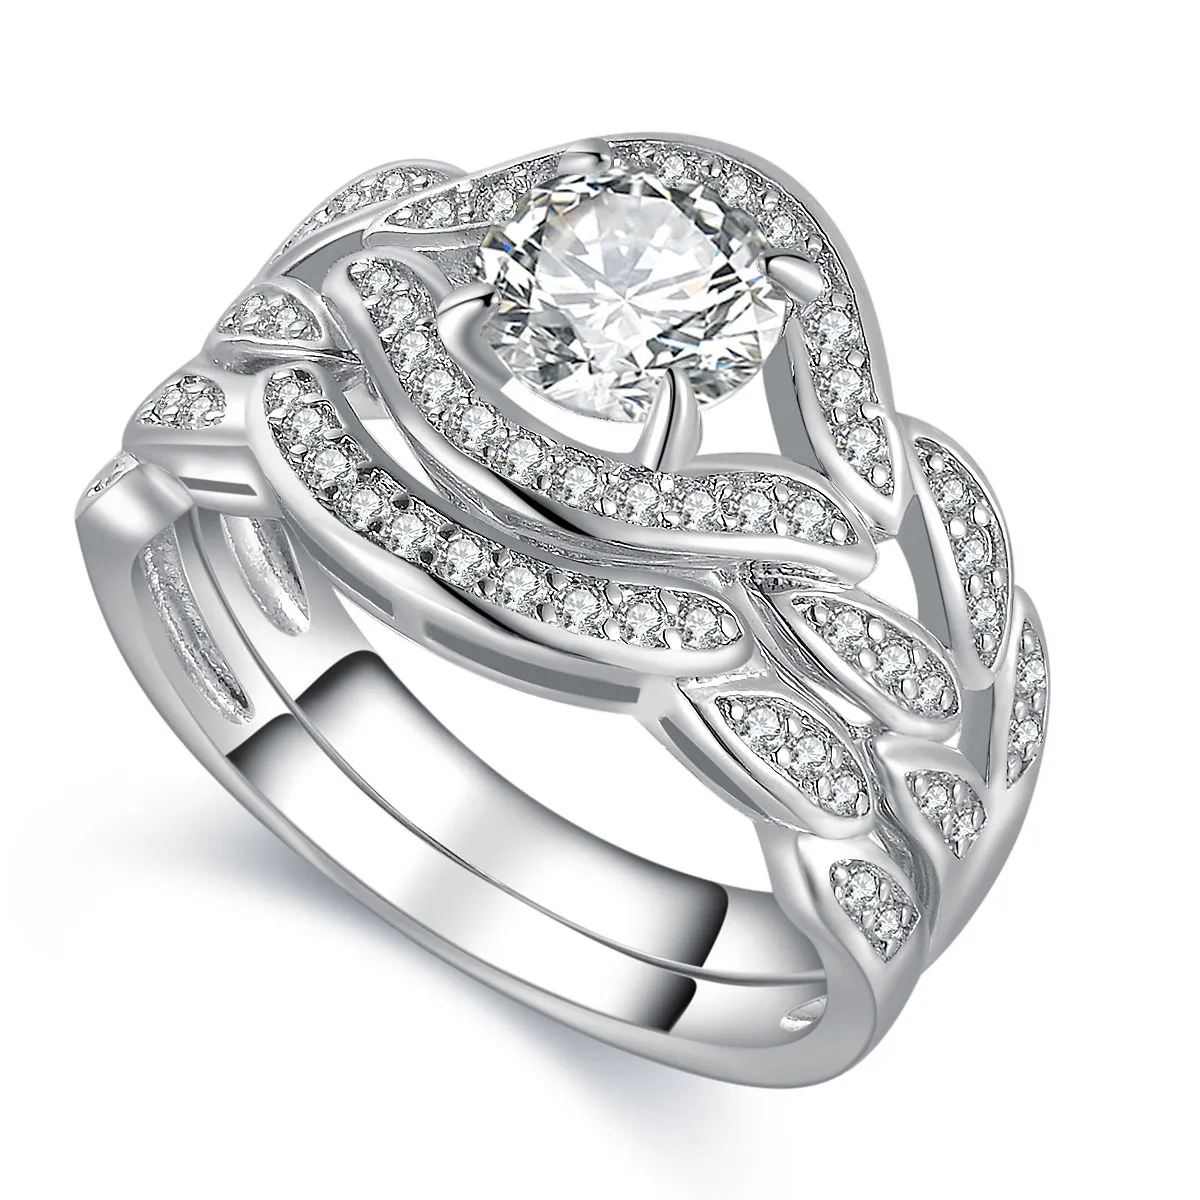 2017 New Arrilval Hot Fashion Jewelry 10KT White Gold Filled Topaz CZ Diamond Gemstones Engagement Wedding Women Bridal Ring Set Size 5-11